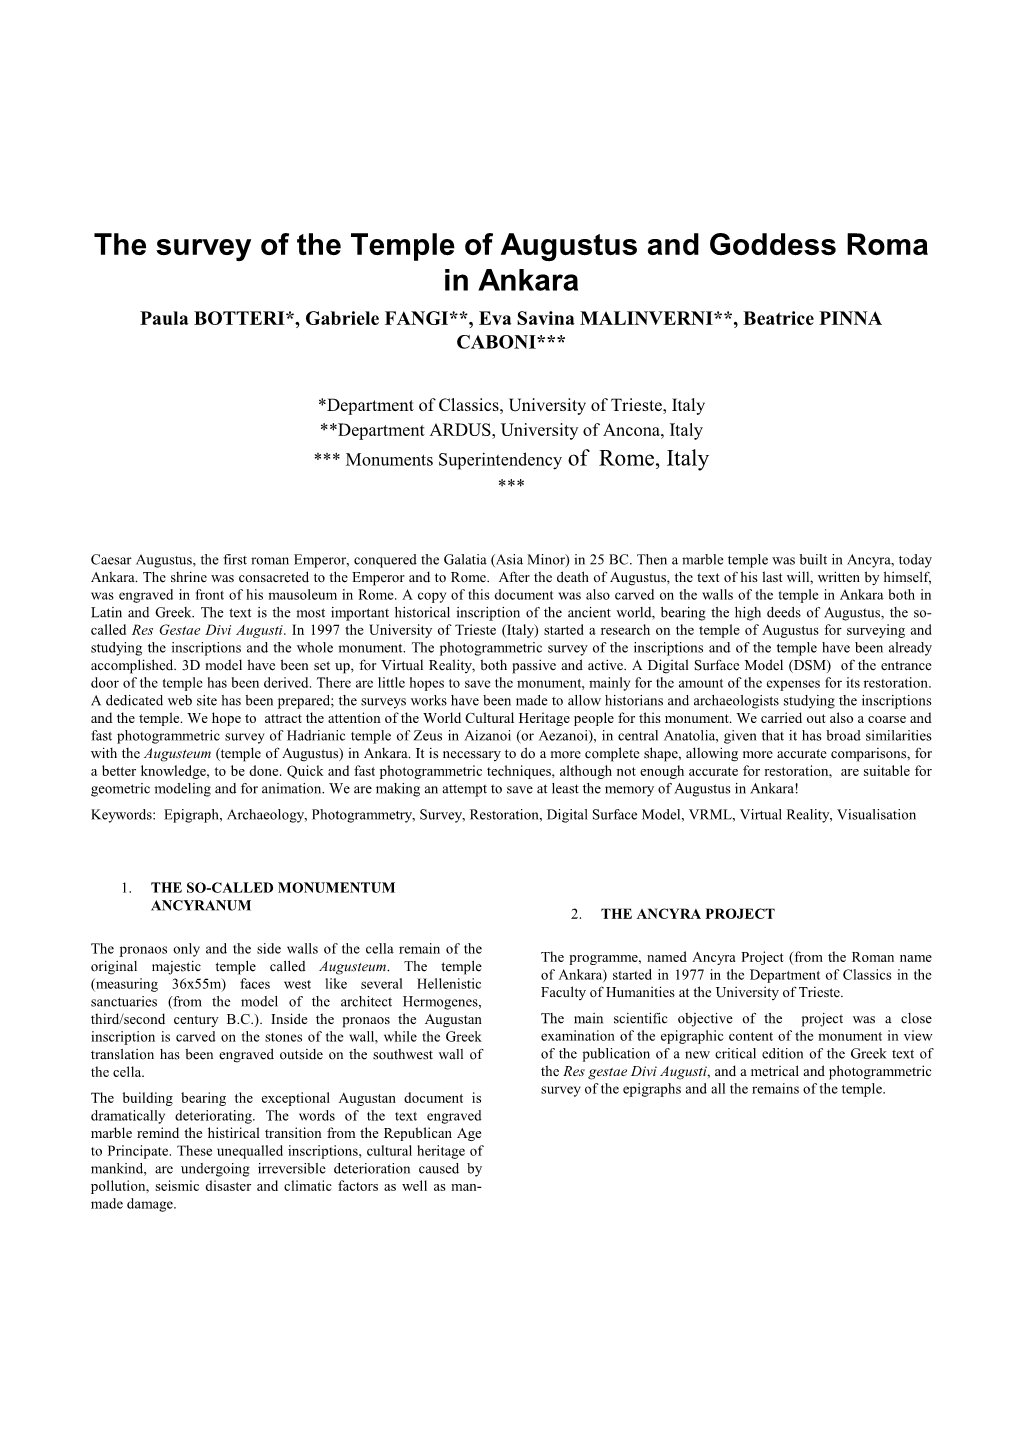 The Survey of the Temple of Augustus and Goddess Roma in Ankara Paula BOTTERI*, Gabriele FANGI**, Eva Savina MALINVERNI**, Beatrice PINNA CABONI***